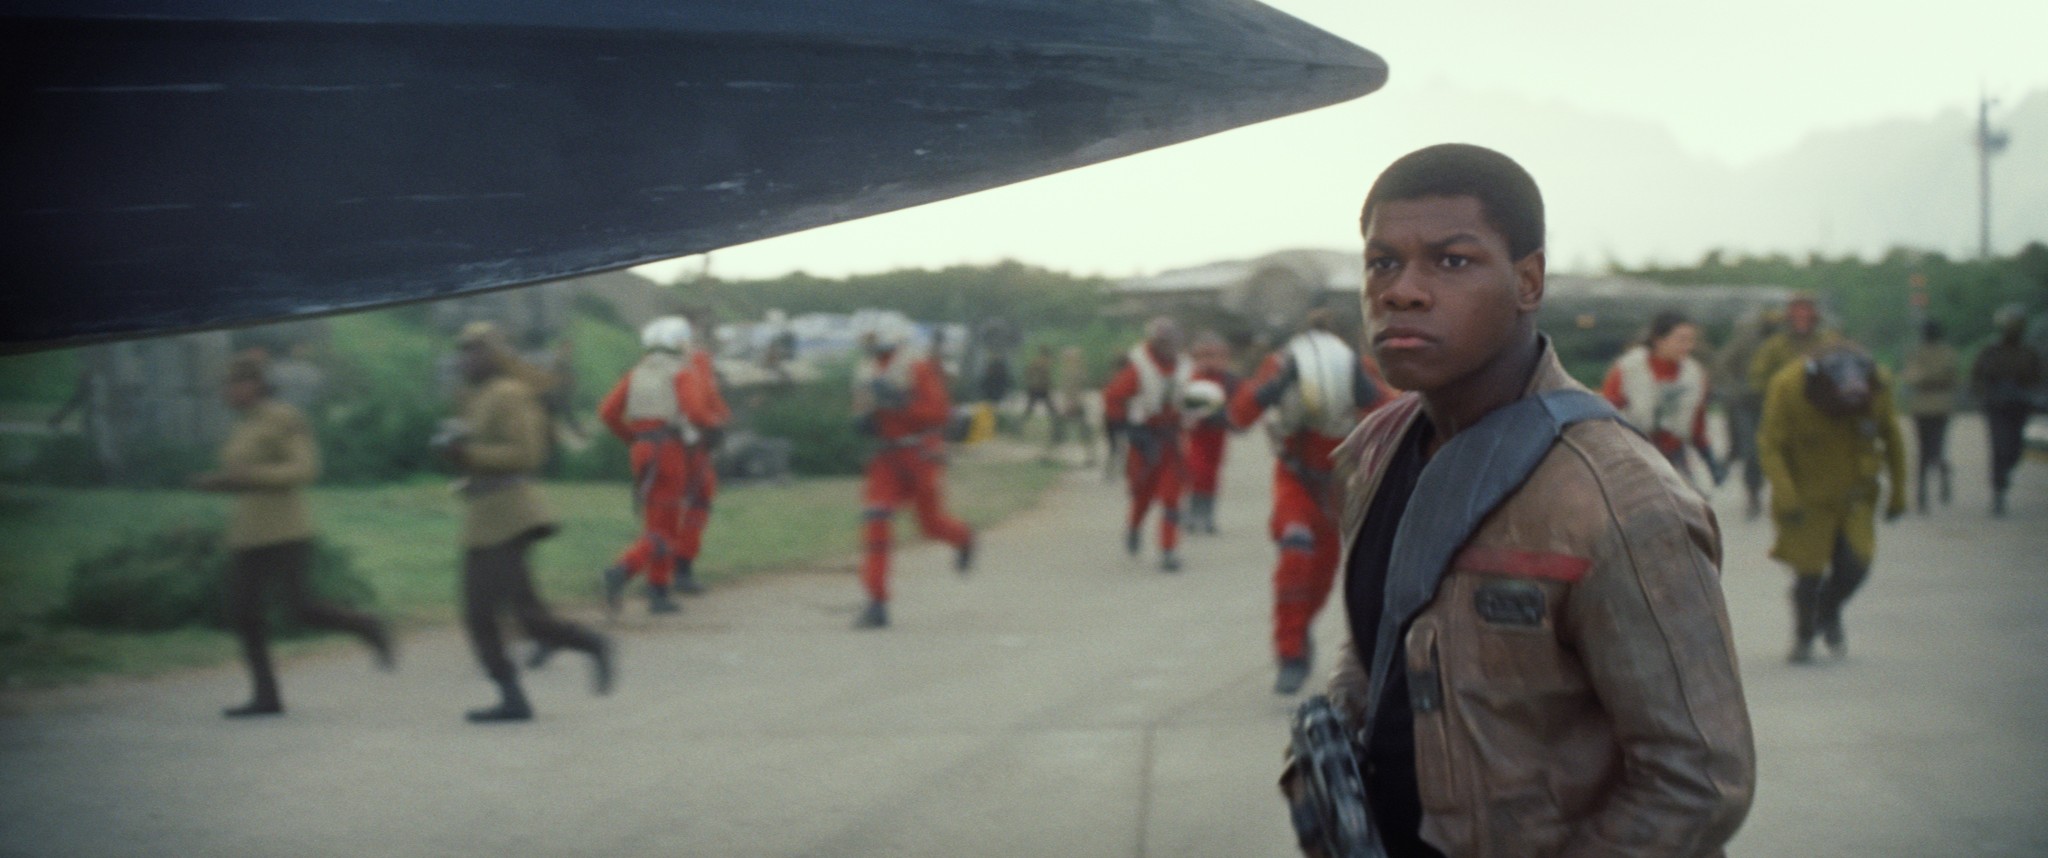 Star Wars Episode Vii The Force Awakens Star Wars John Boyega Finn Star Wars 2048x858